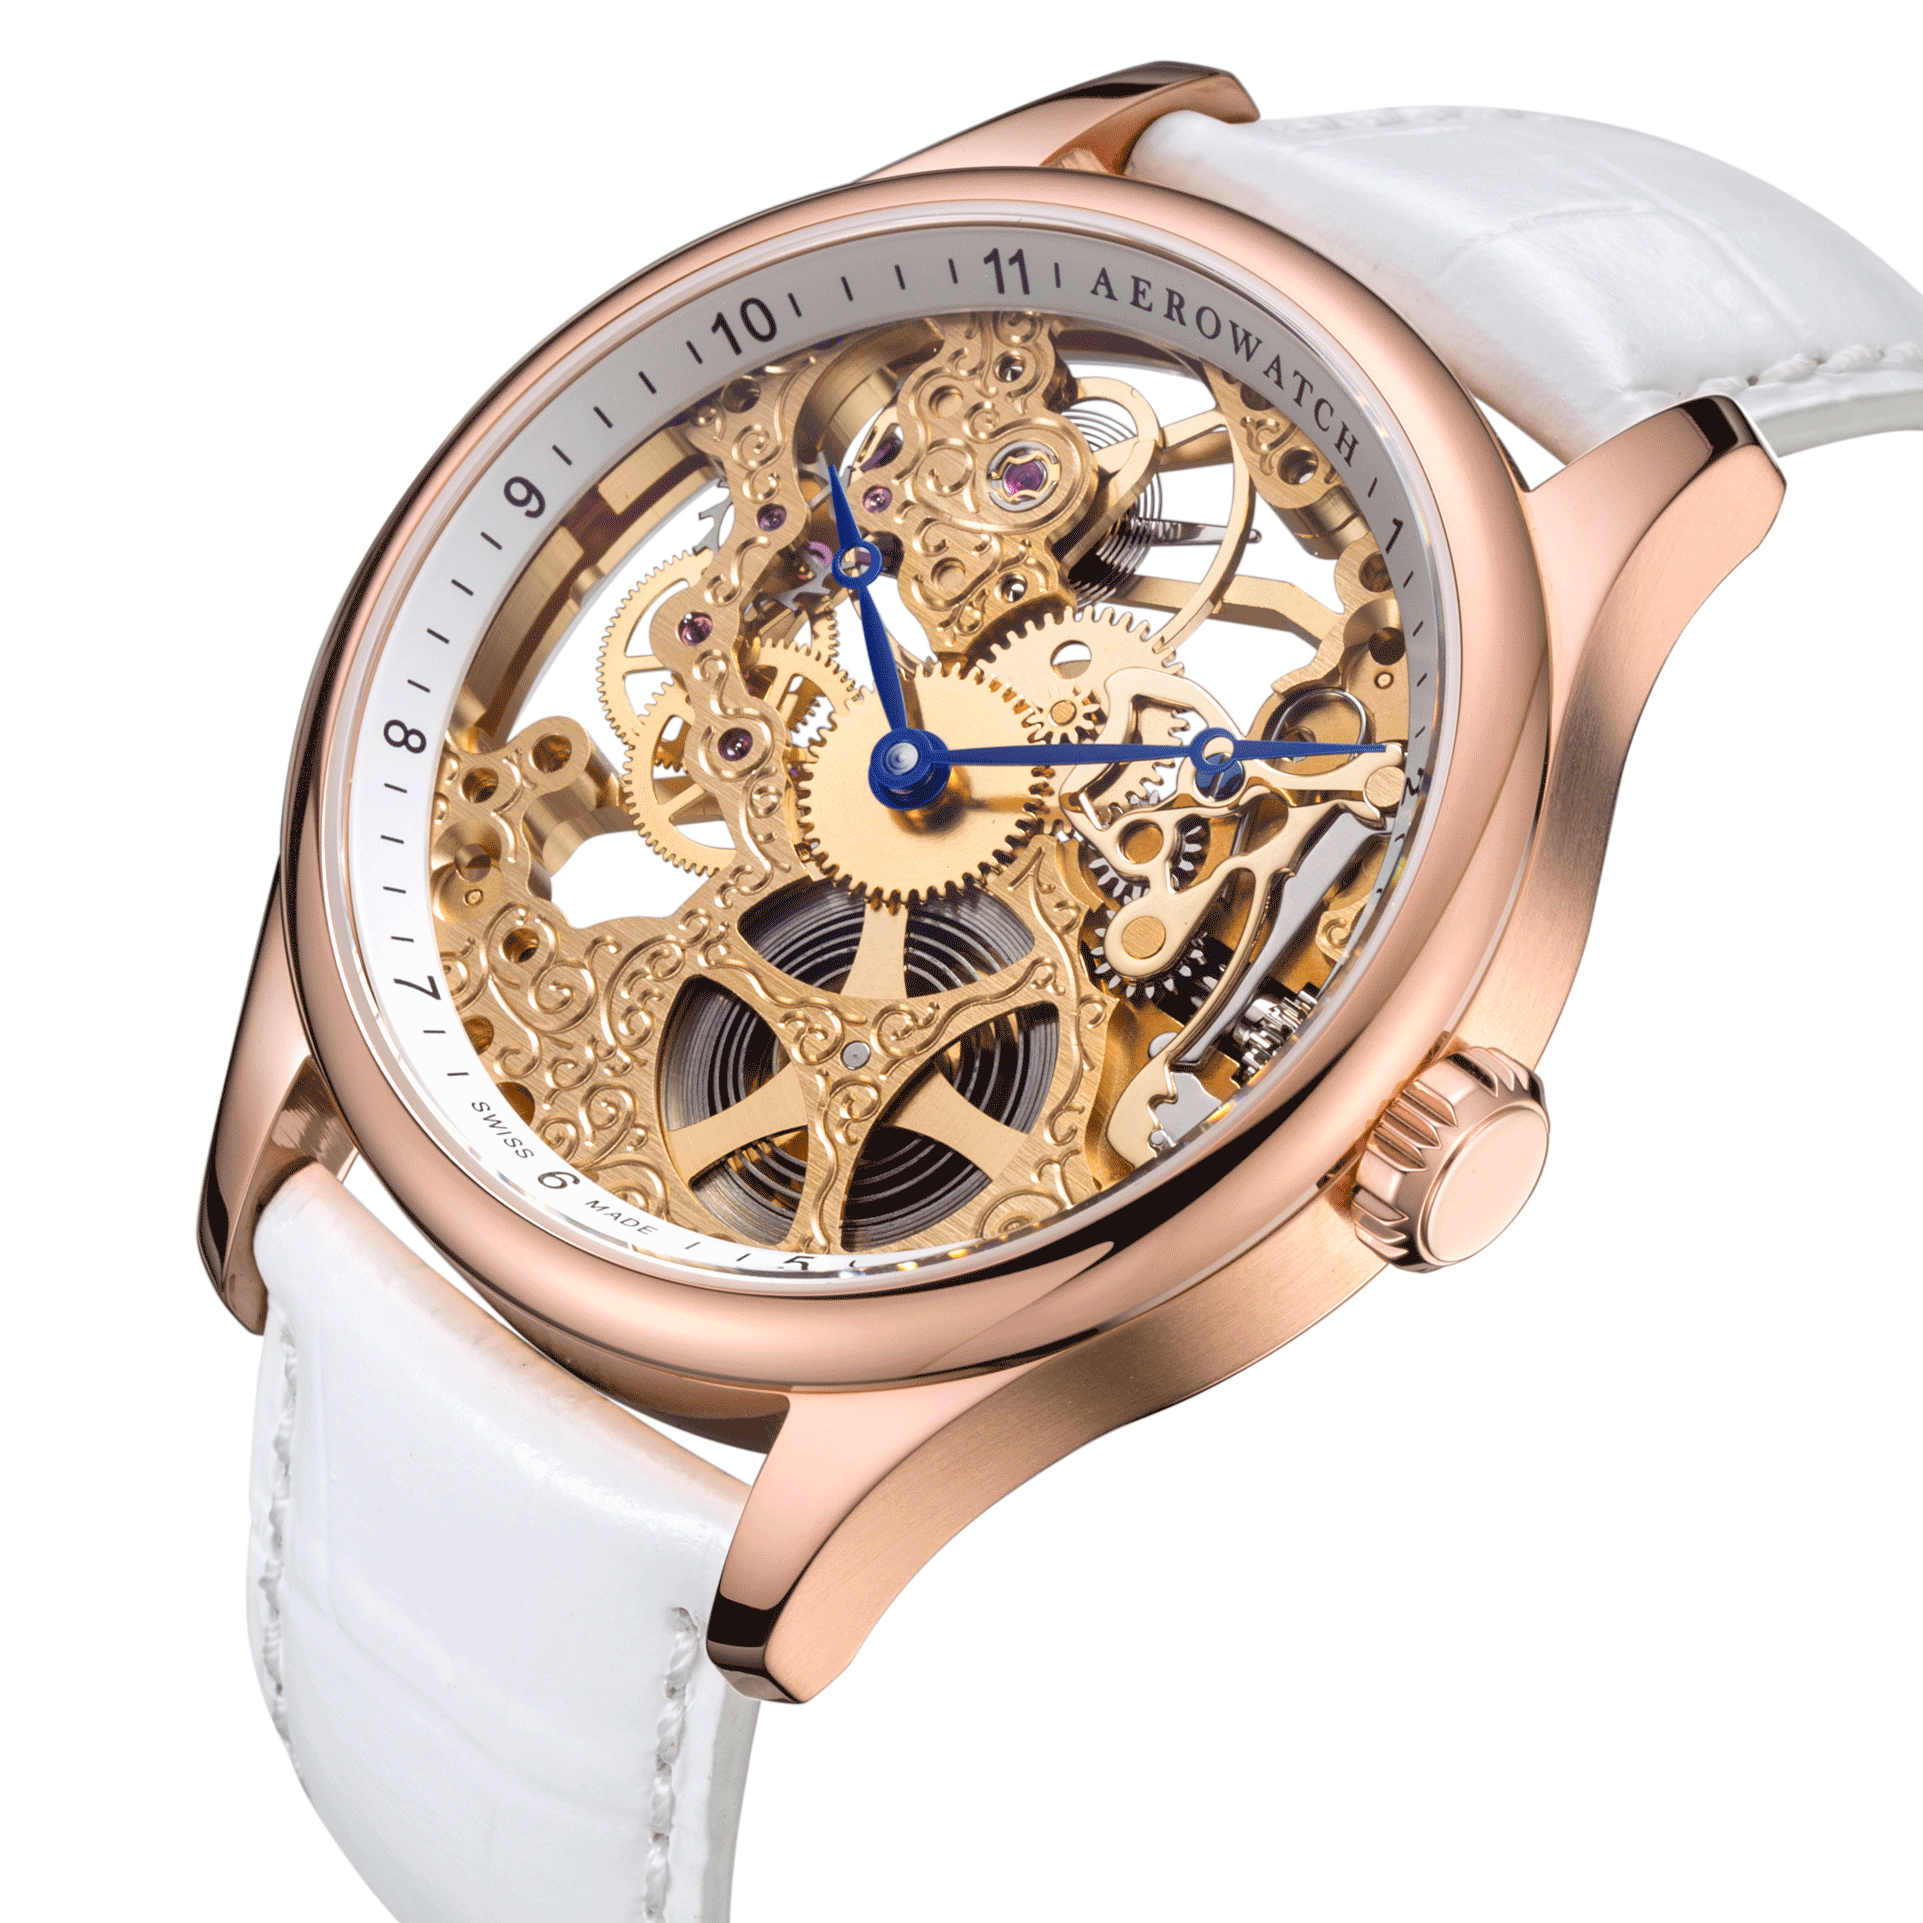 Часы прозрачные наручные. Скелетоны Aerowatch часы. Часы кварцевые Aerowatch скелетоны. Часы Орион скелетон. Часы BCBGMAXAZRIA скелетоны женские.